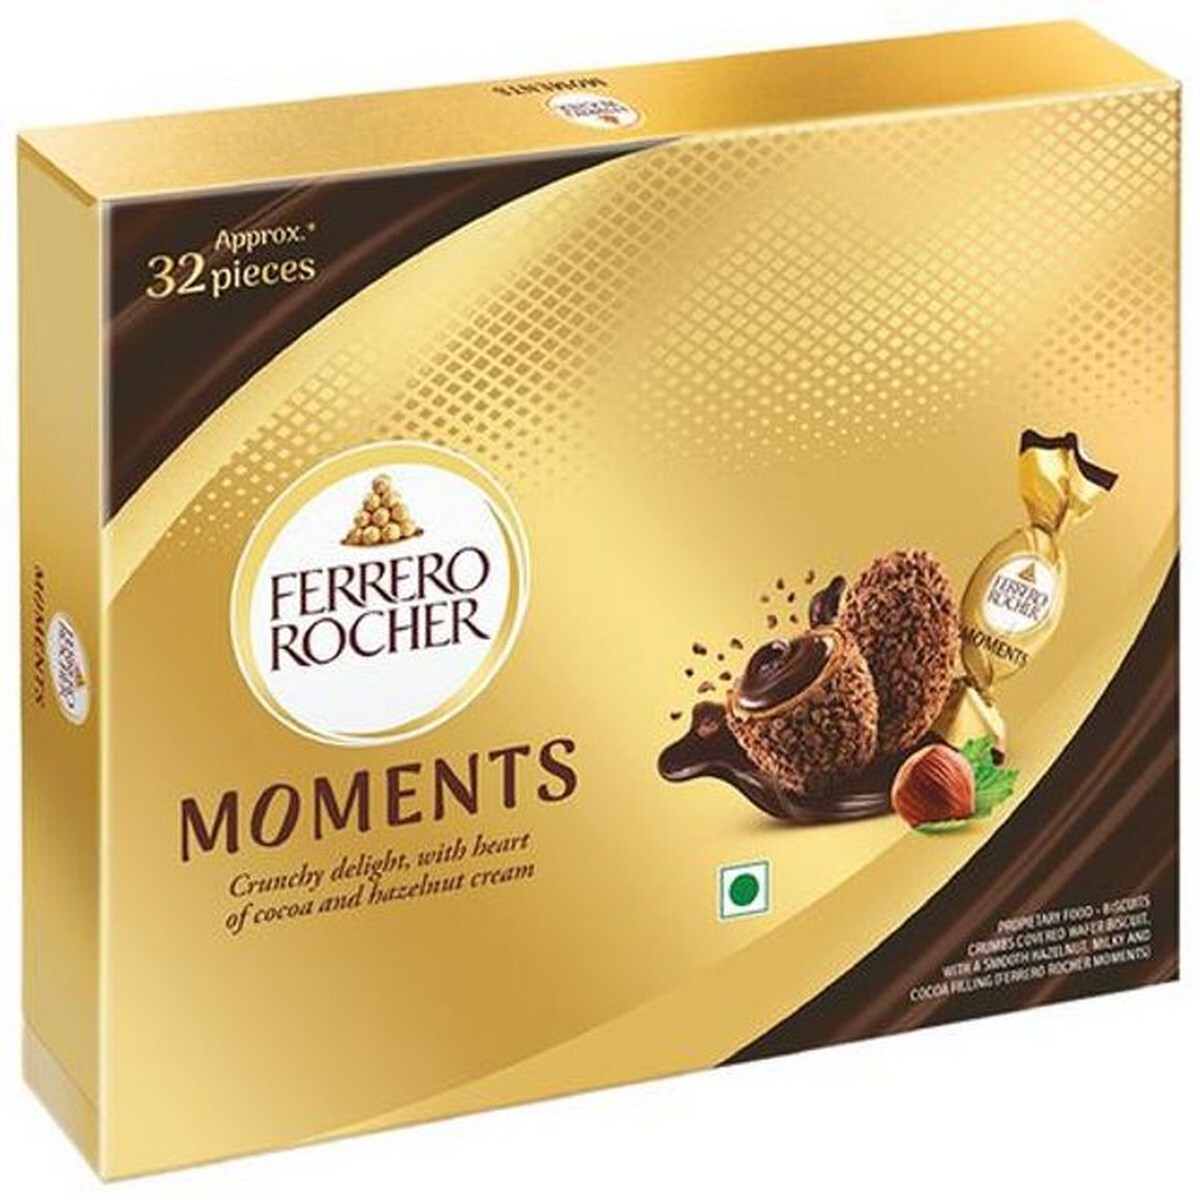 Ferrero Rocher Moments Chocolates, 185.6 G